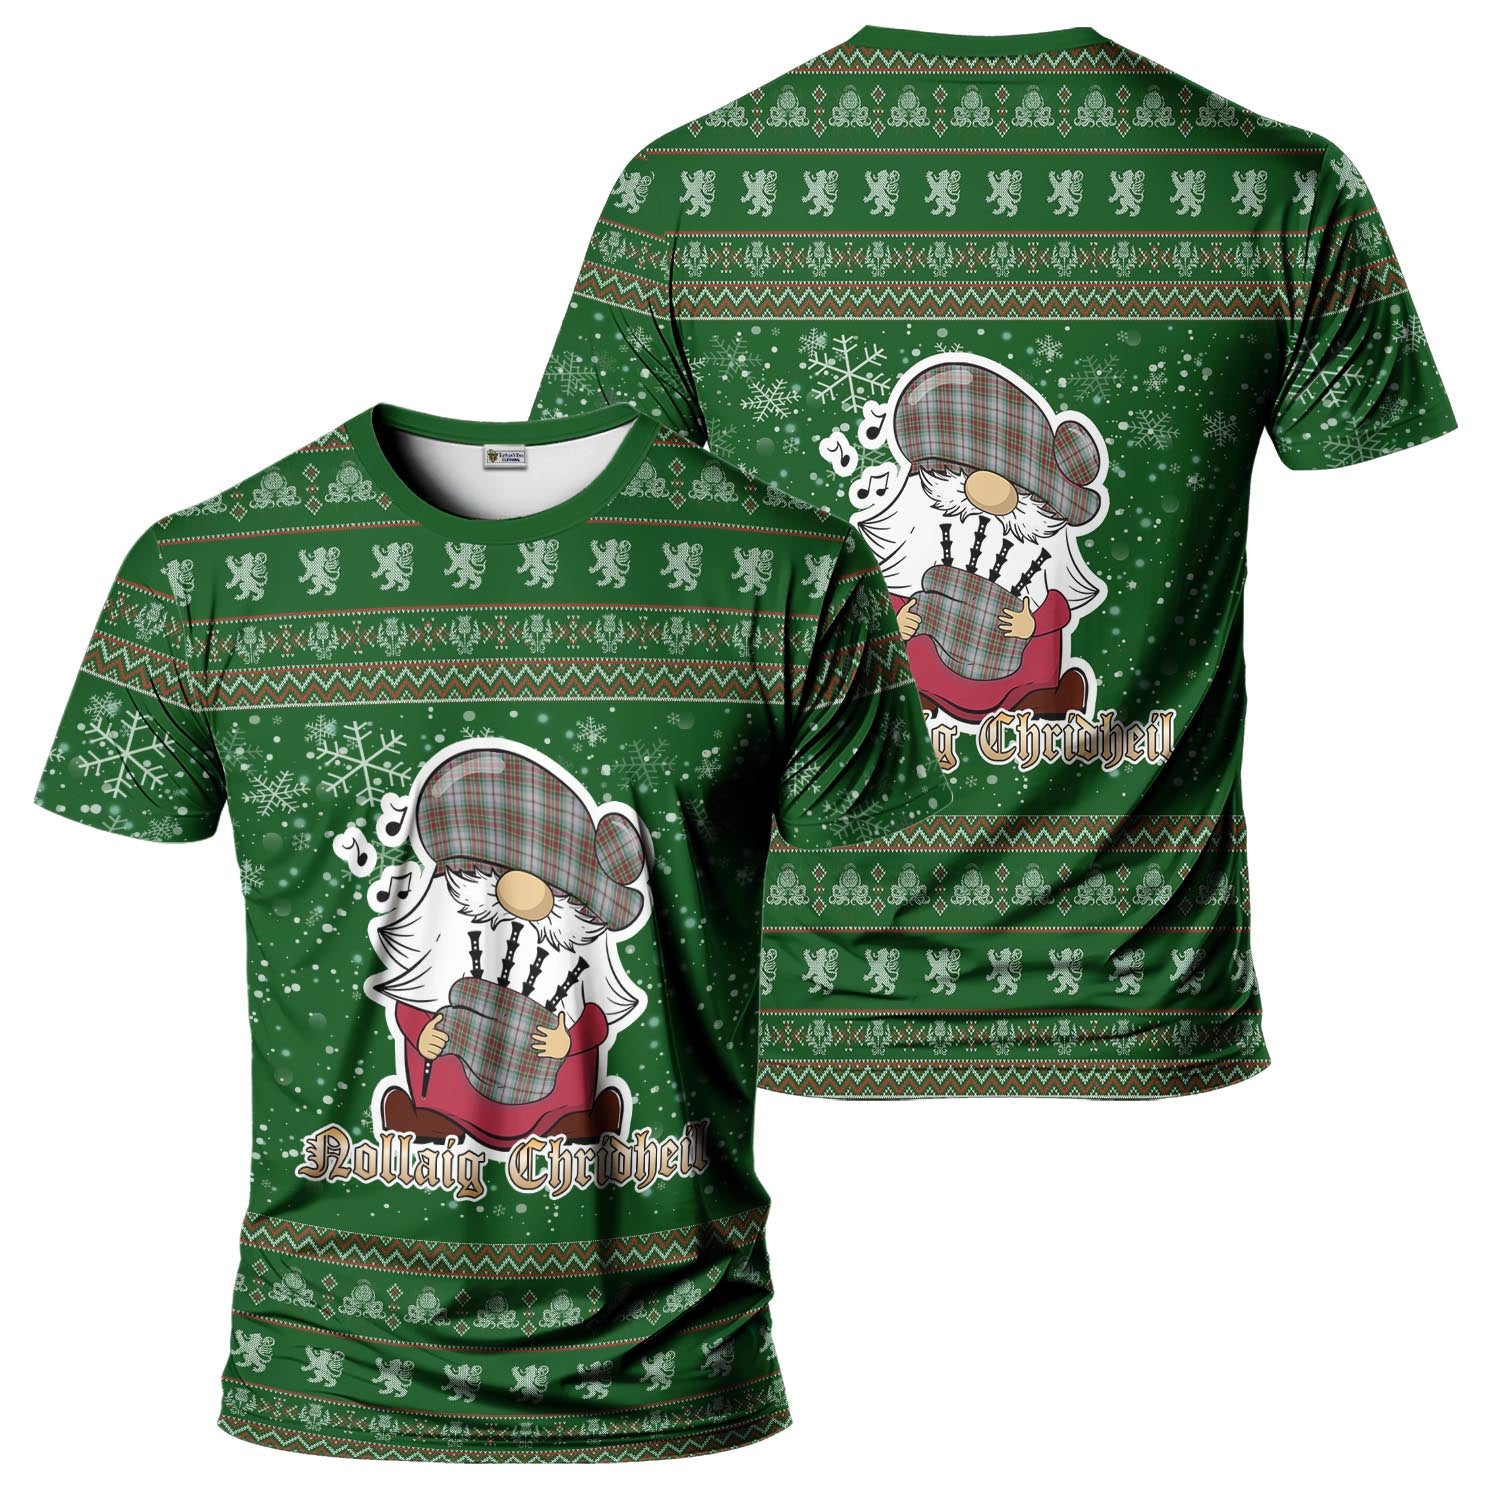 MacBain Dress Clan Christmas Family T-Shirt with Funny Gnome Playing Bagpipes Men's Shirt Green - Tartanvibesclothing